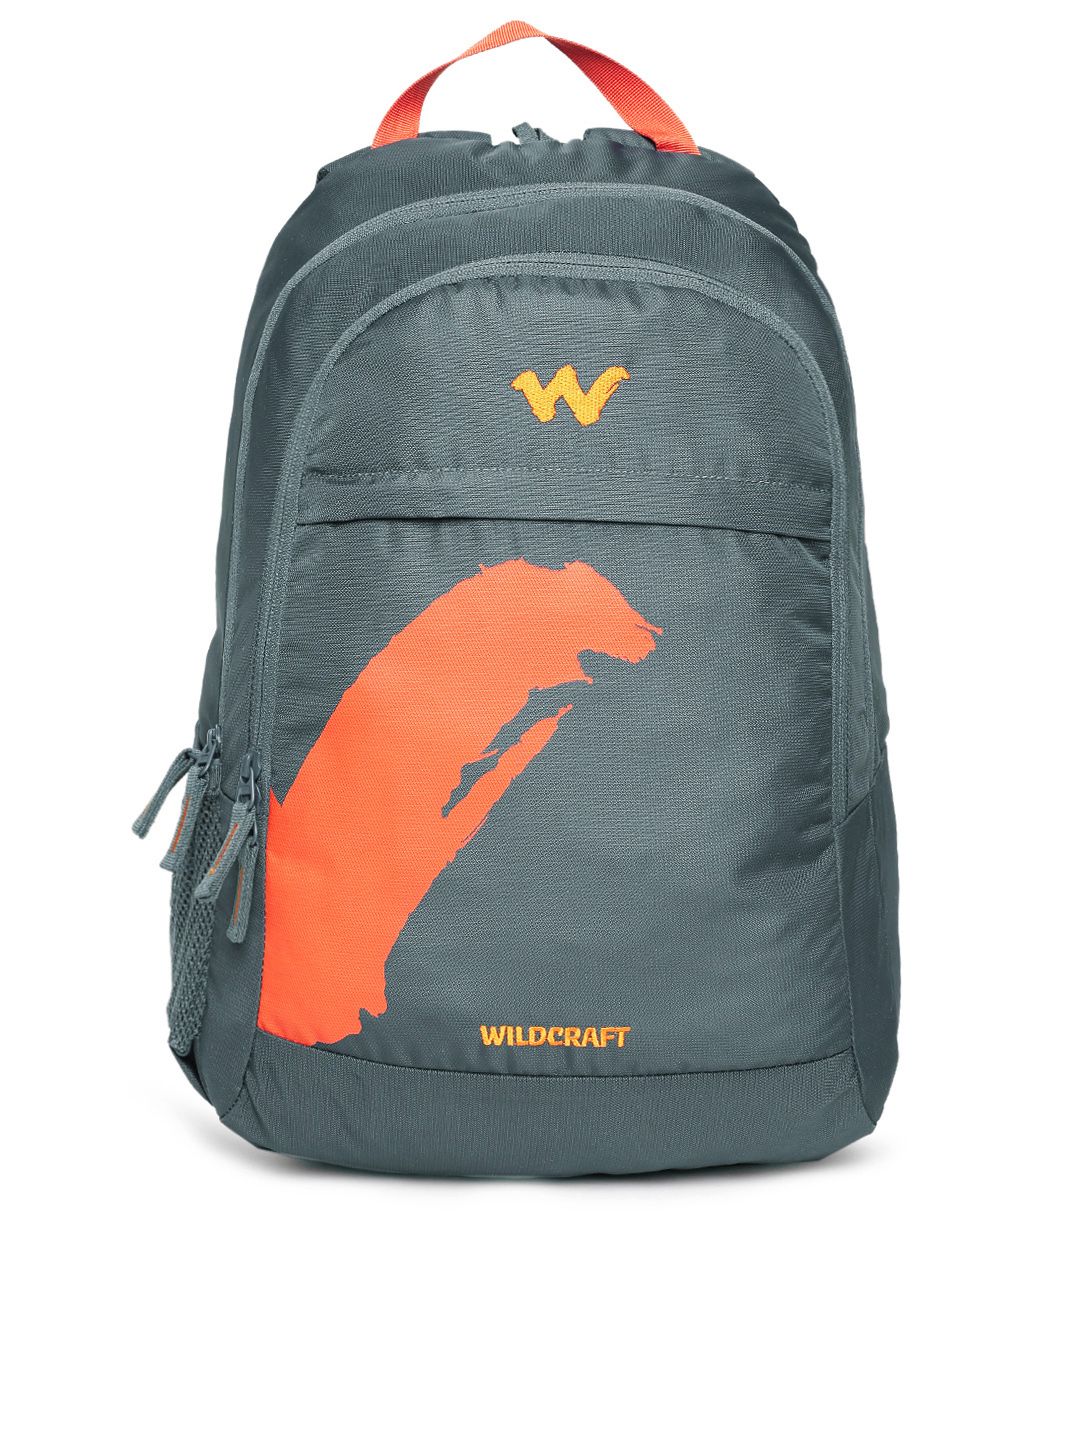 Wildcraft Unisex Grey Graphic Backpack Price in India